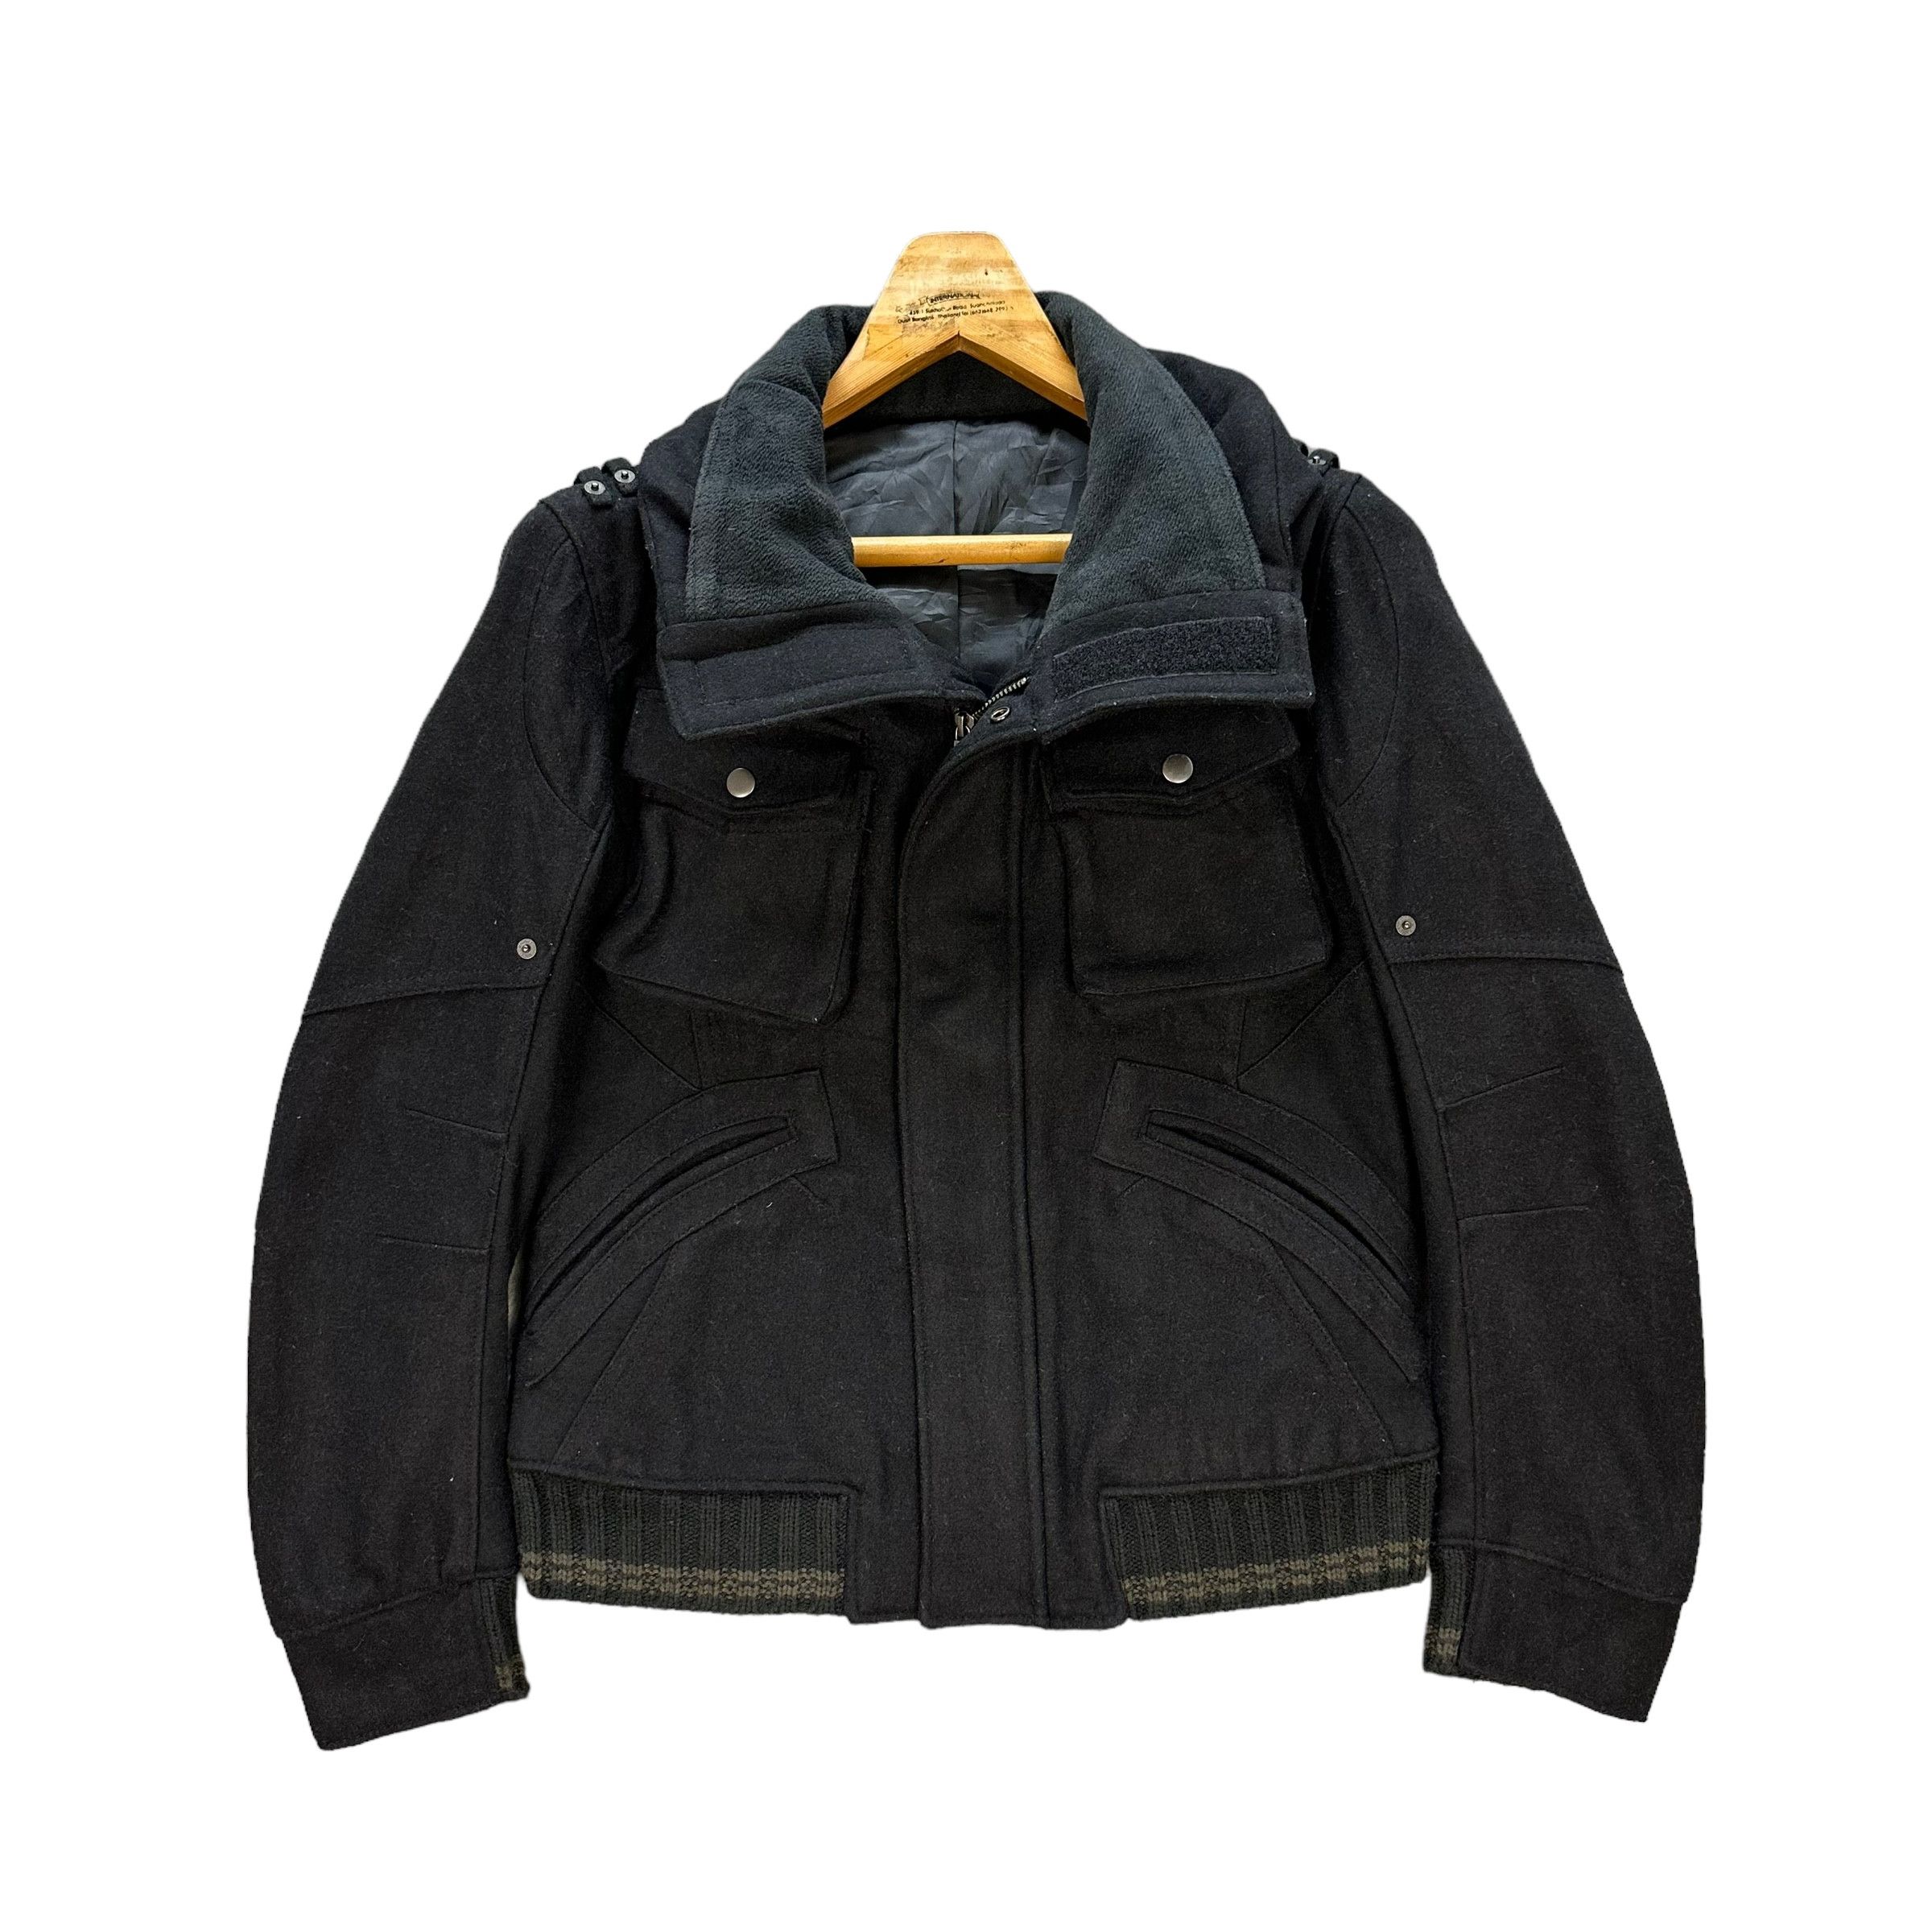 Vintage - PPFM Four Pocket High Collared Wool Jacket #9137-61 - 1